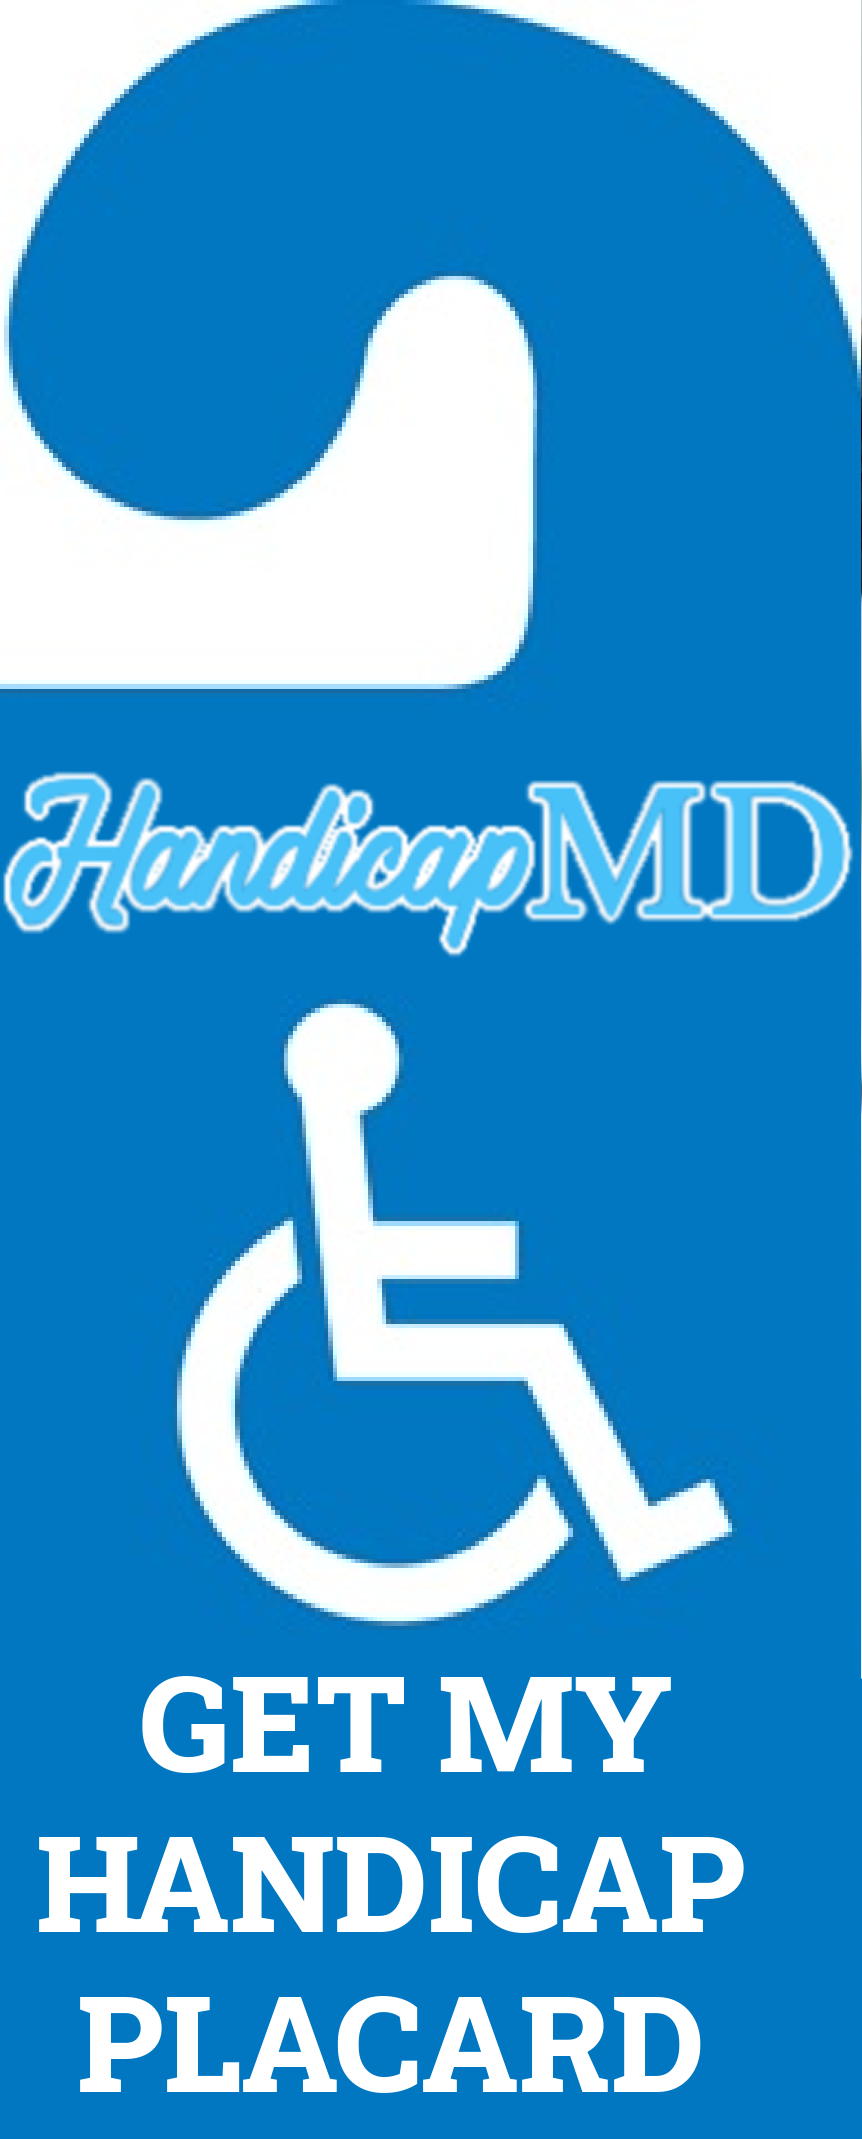 Online Guide to Handicap Parking in Mississippi